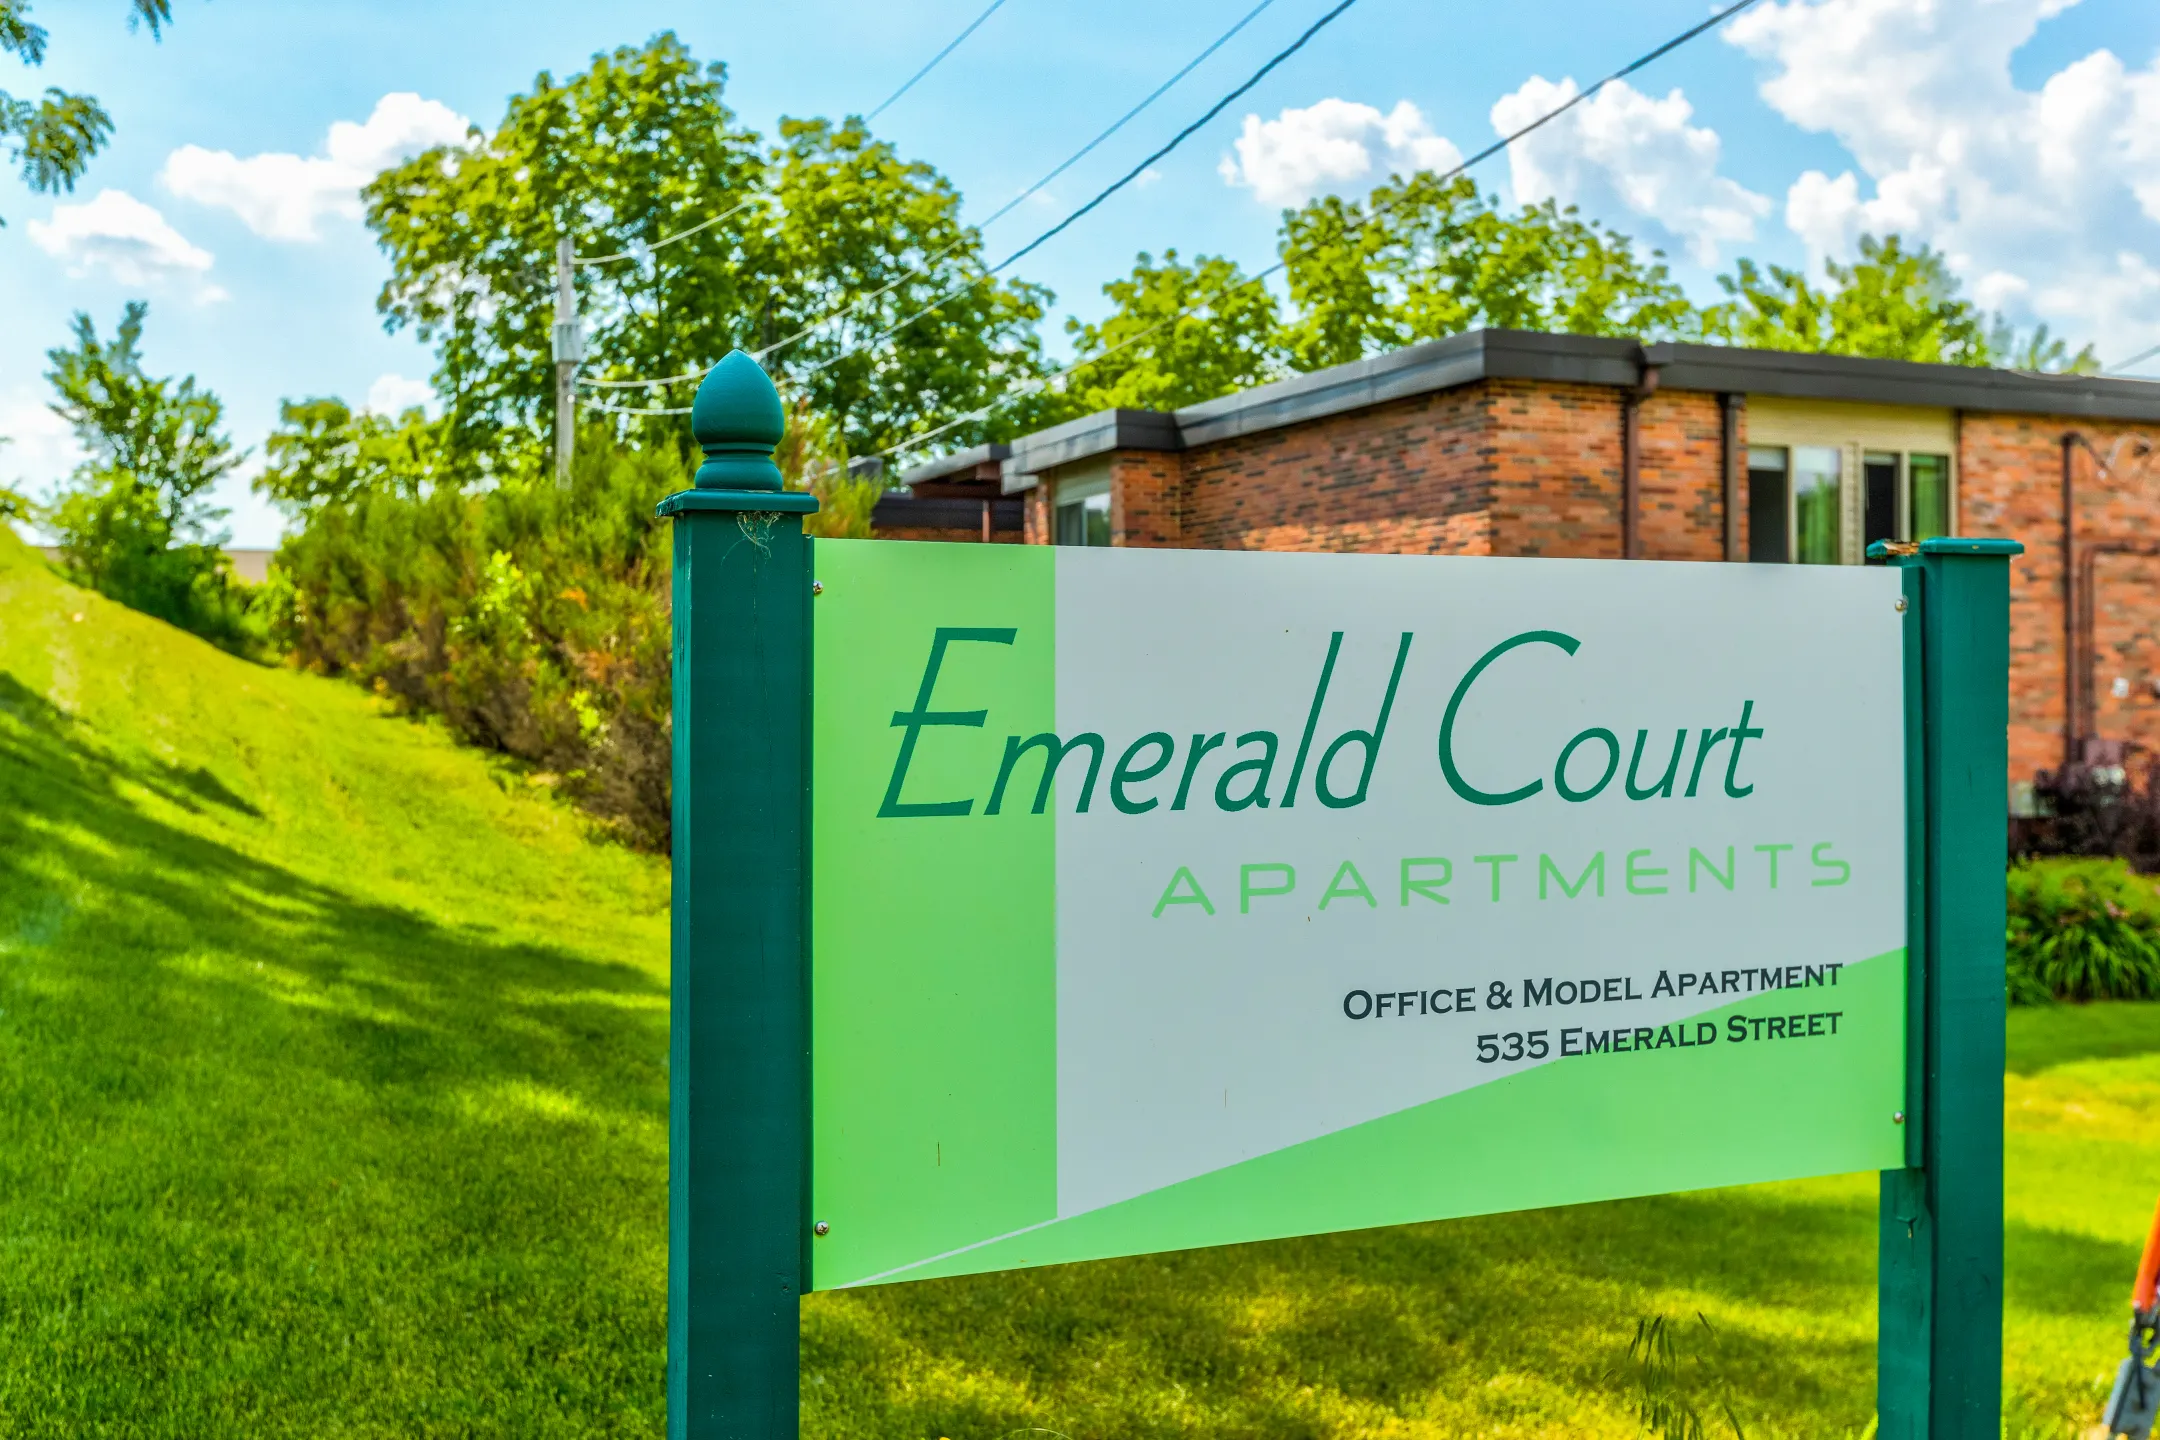 Emerald Court Apartments 535 Emerald St Iowa City IA Apartments